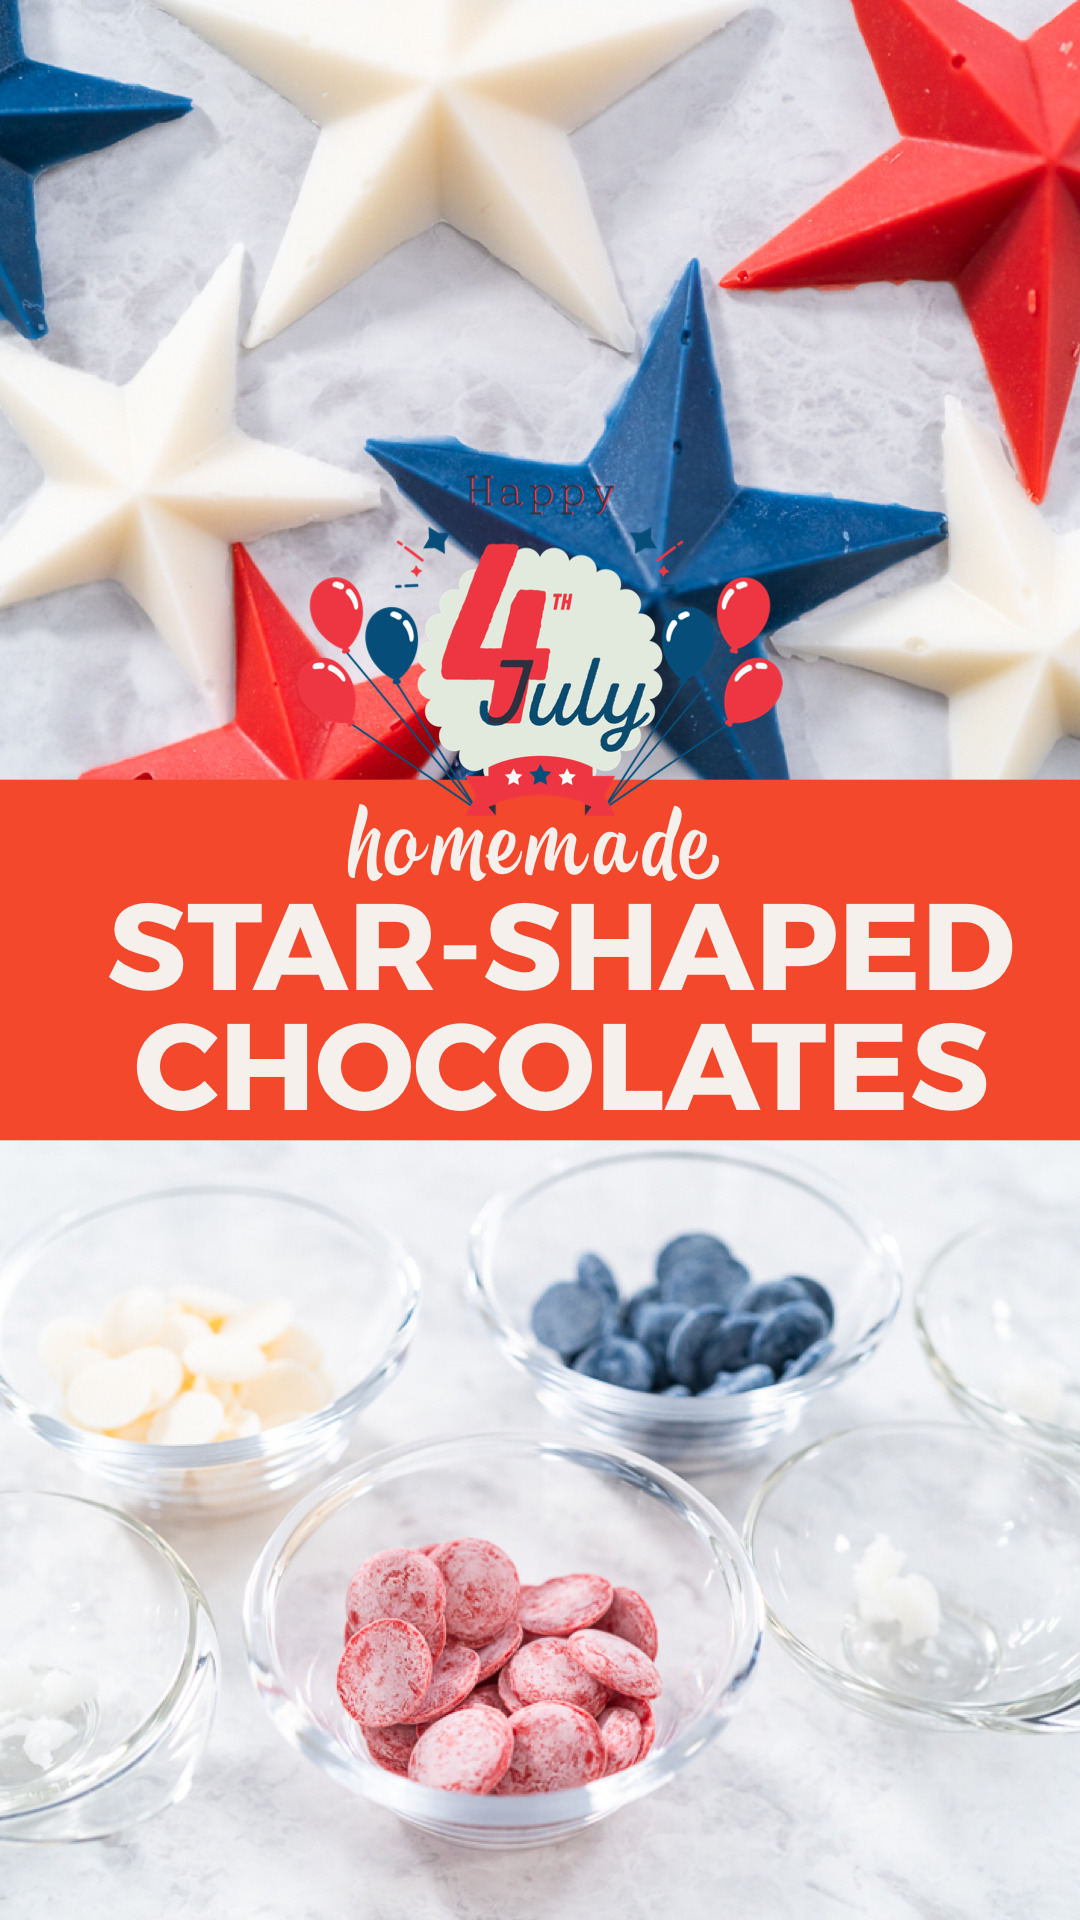 Homemade star-shaped chocolates